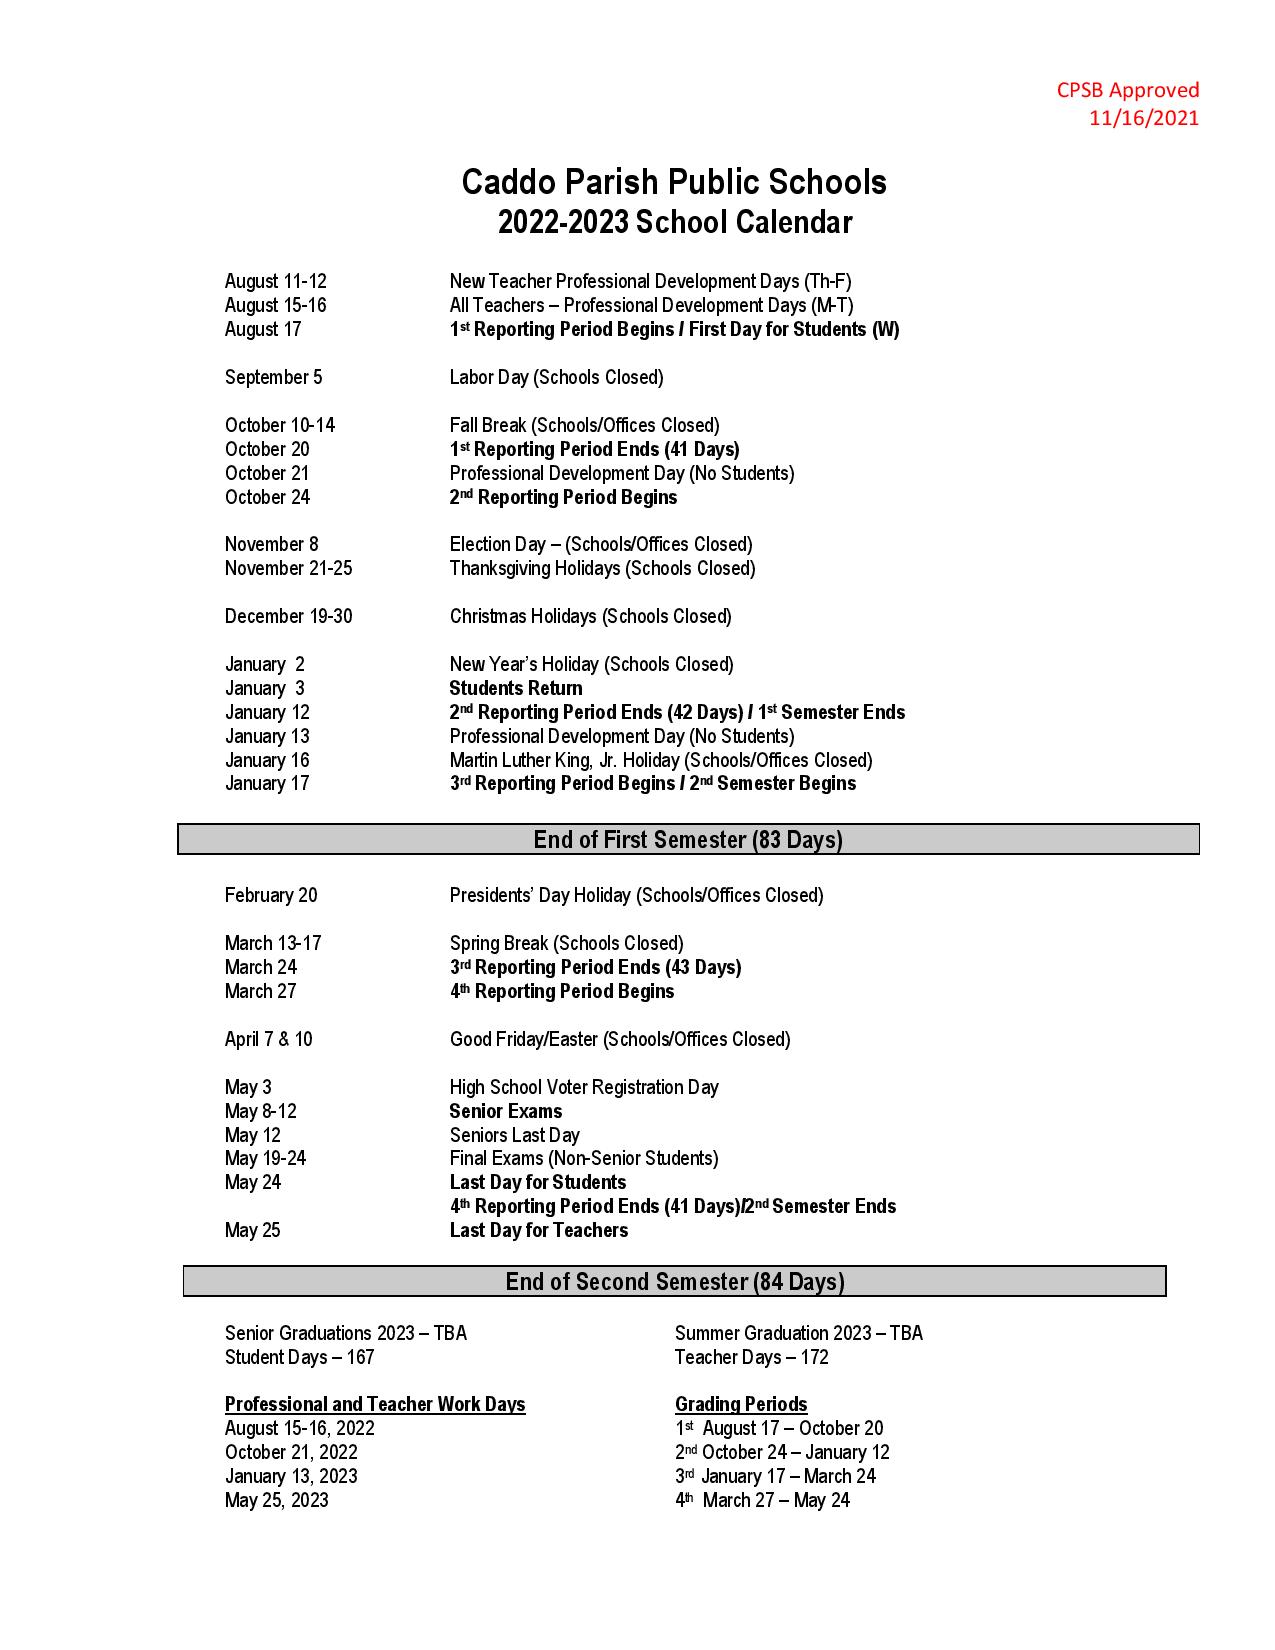 Caddo Parish Public Schools Calendar 20222023